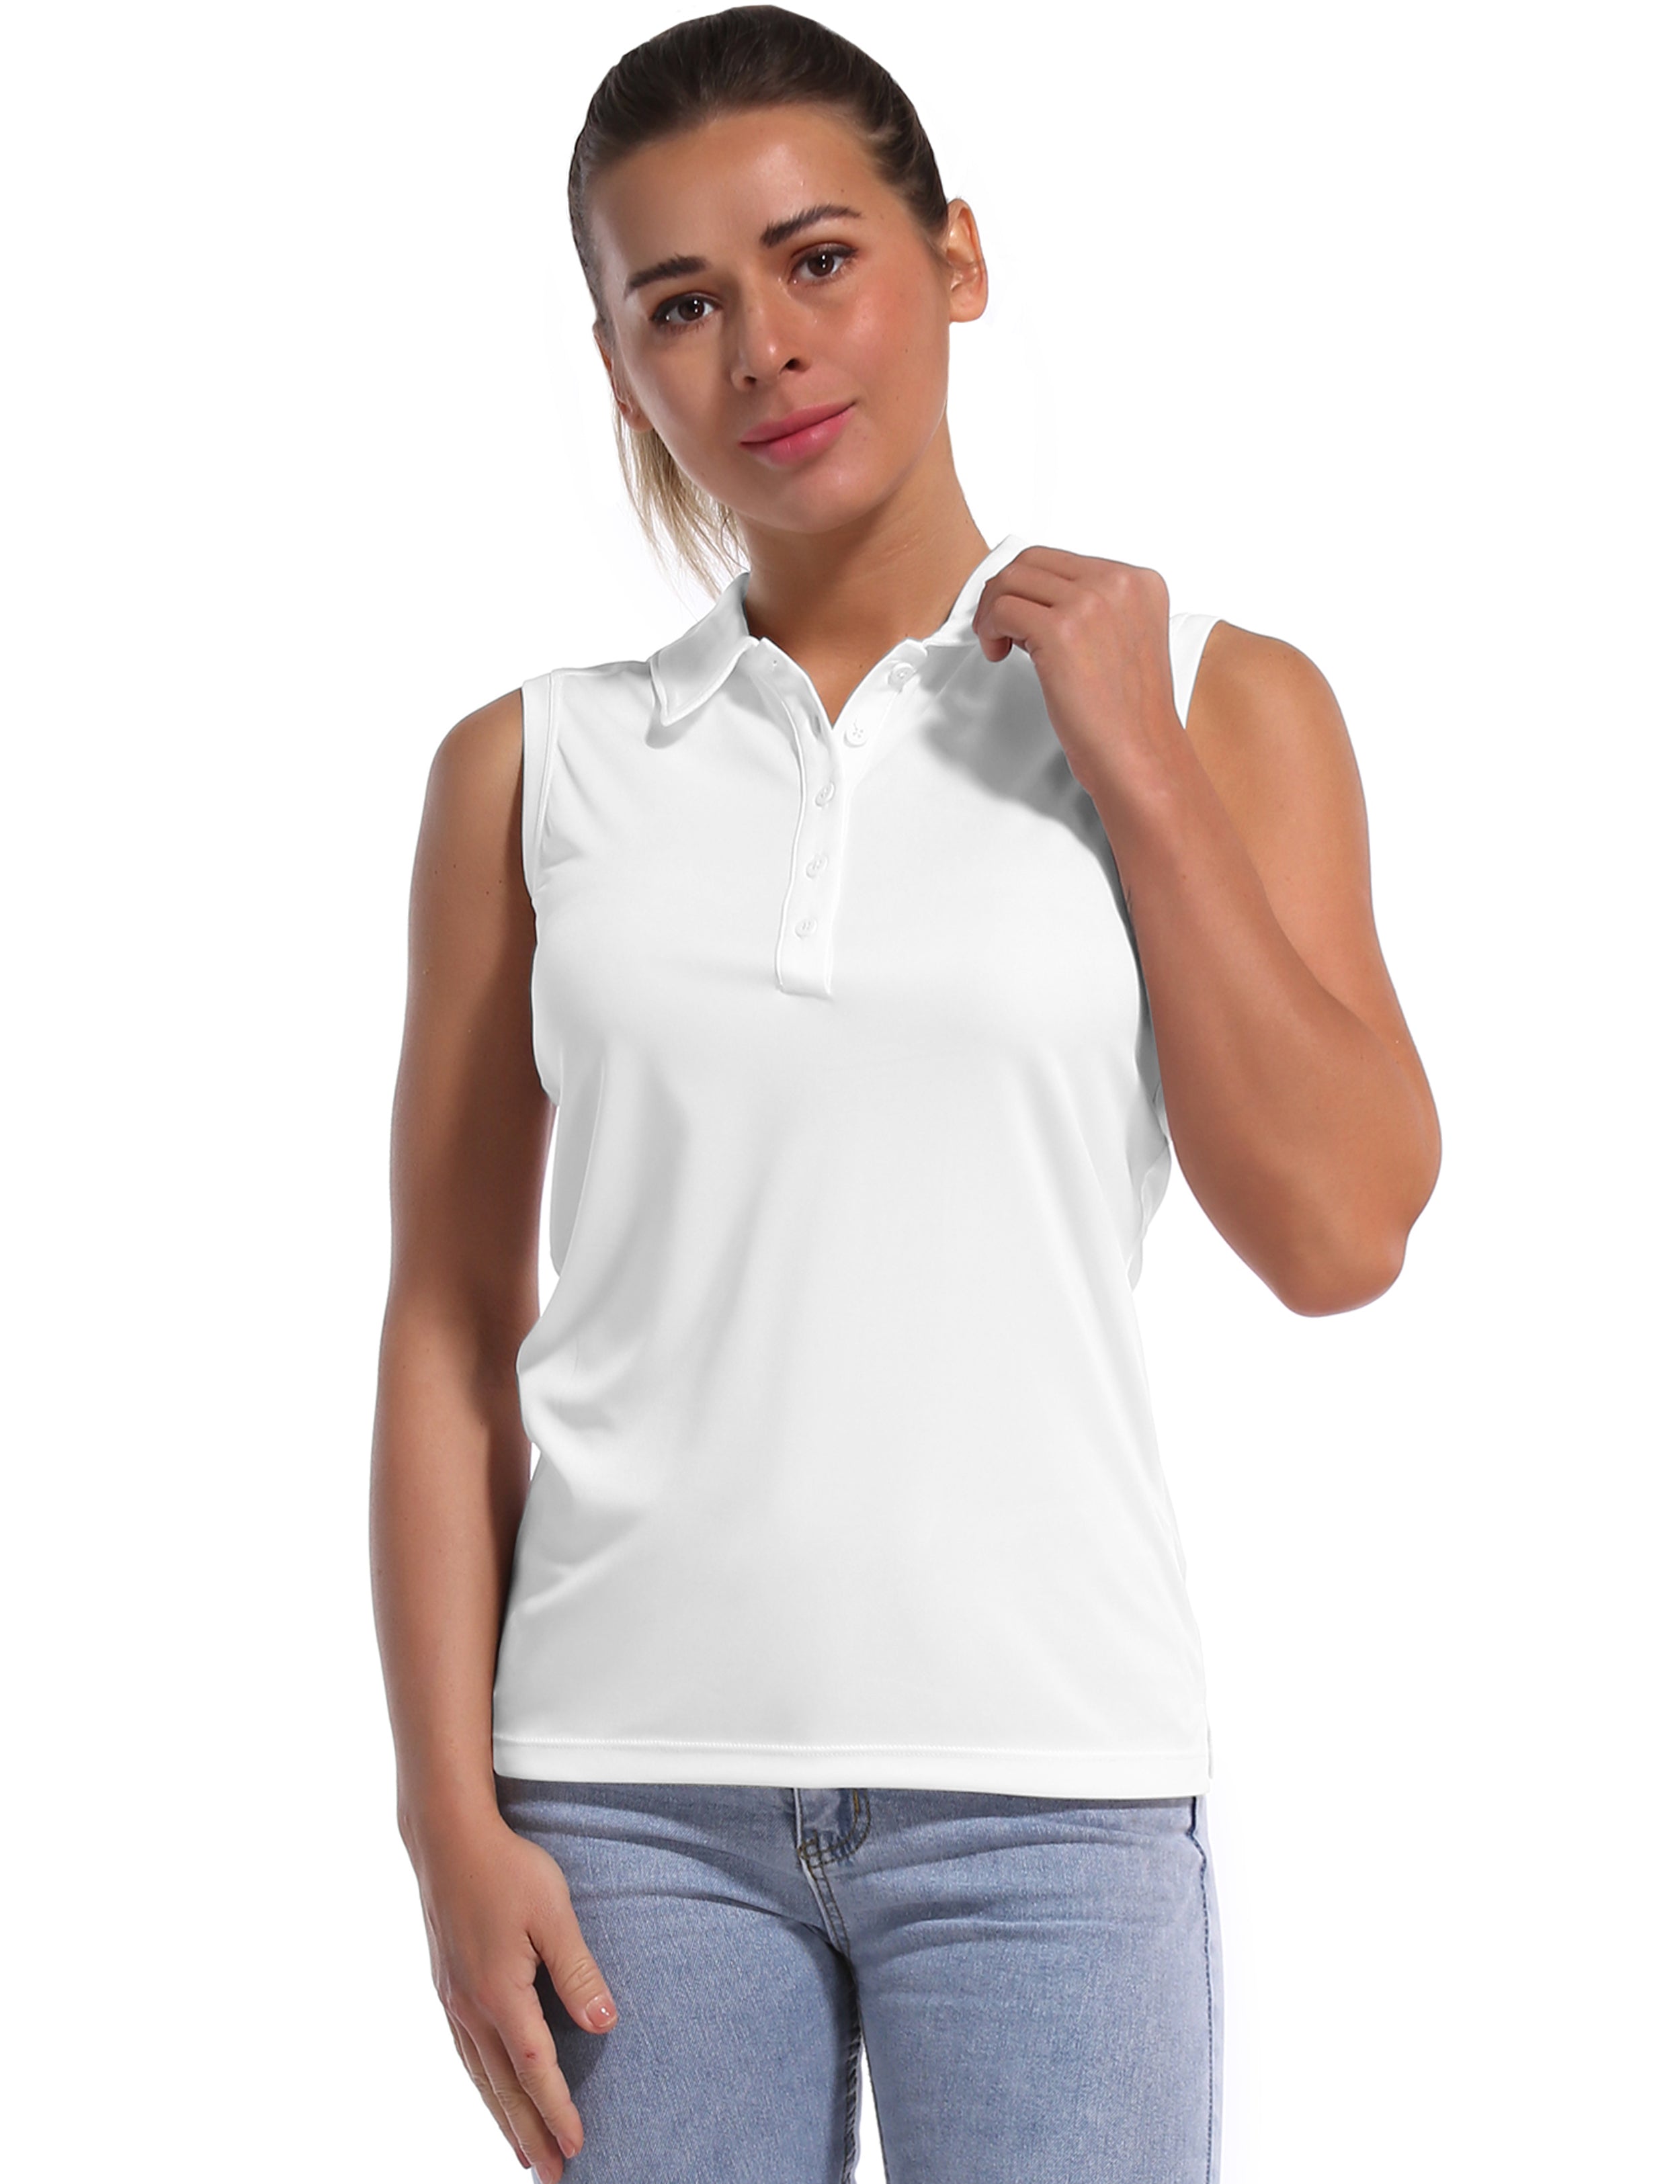 Sleeveless Slim Fit Polo Shirt white_Gym